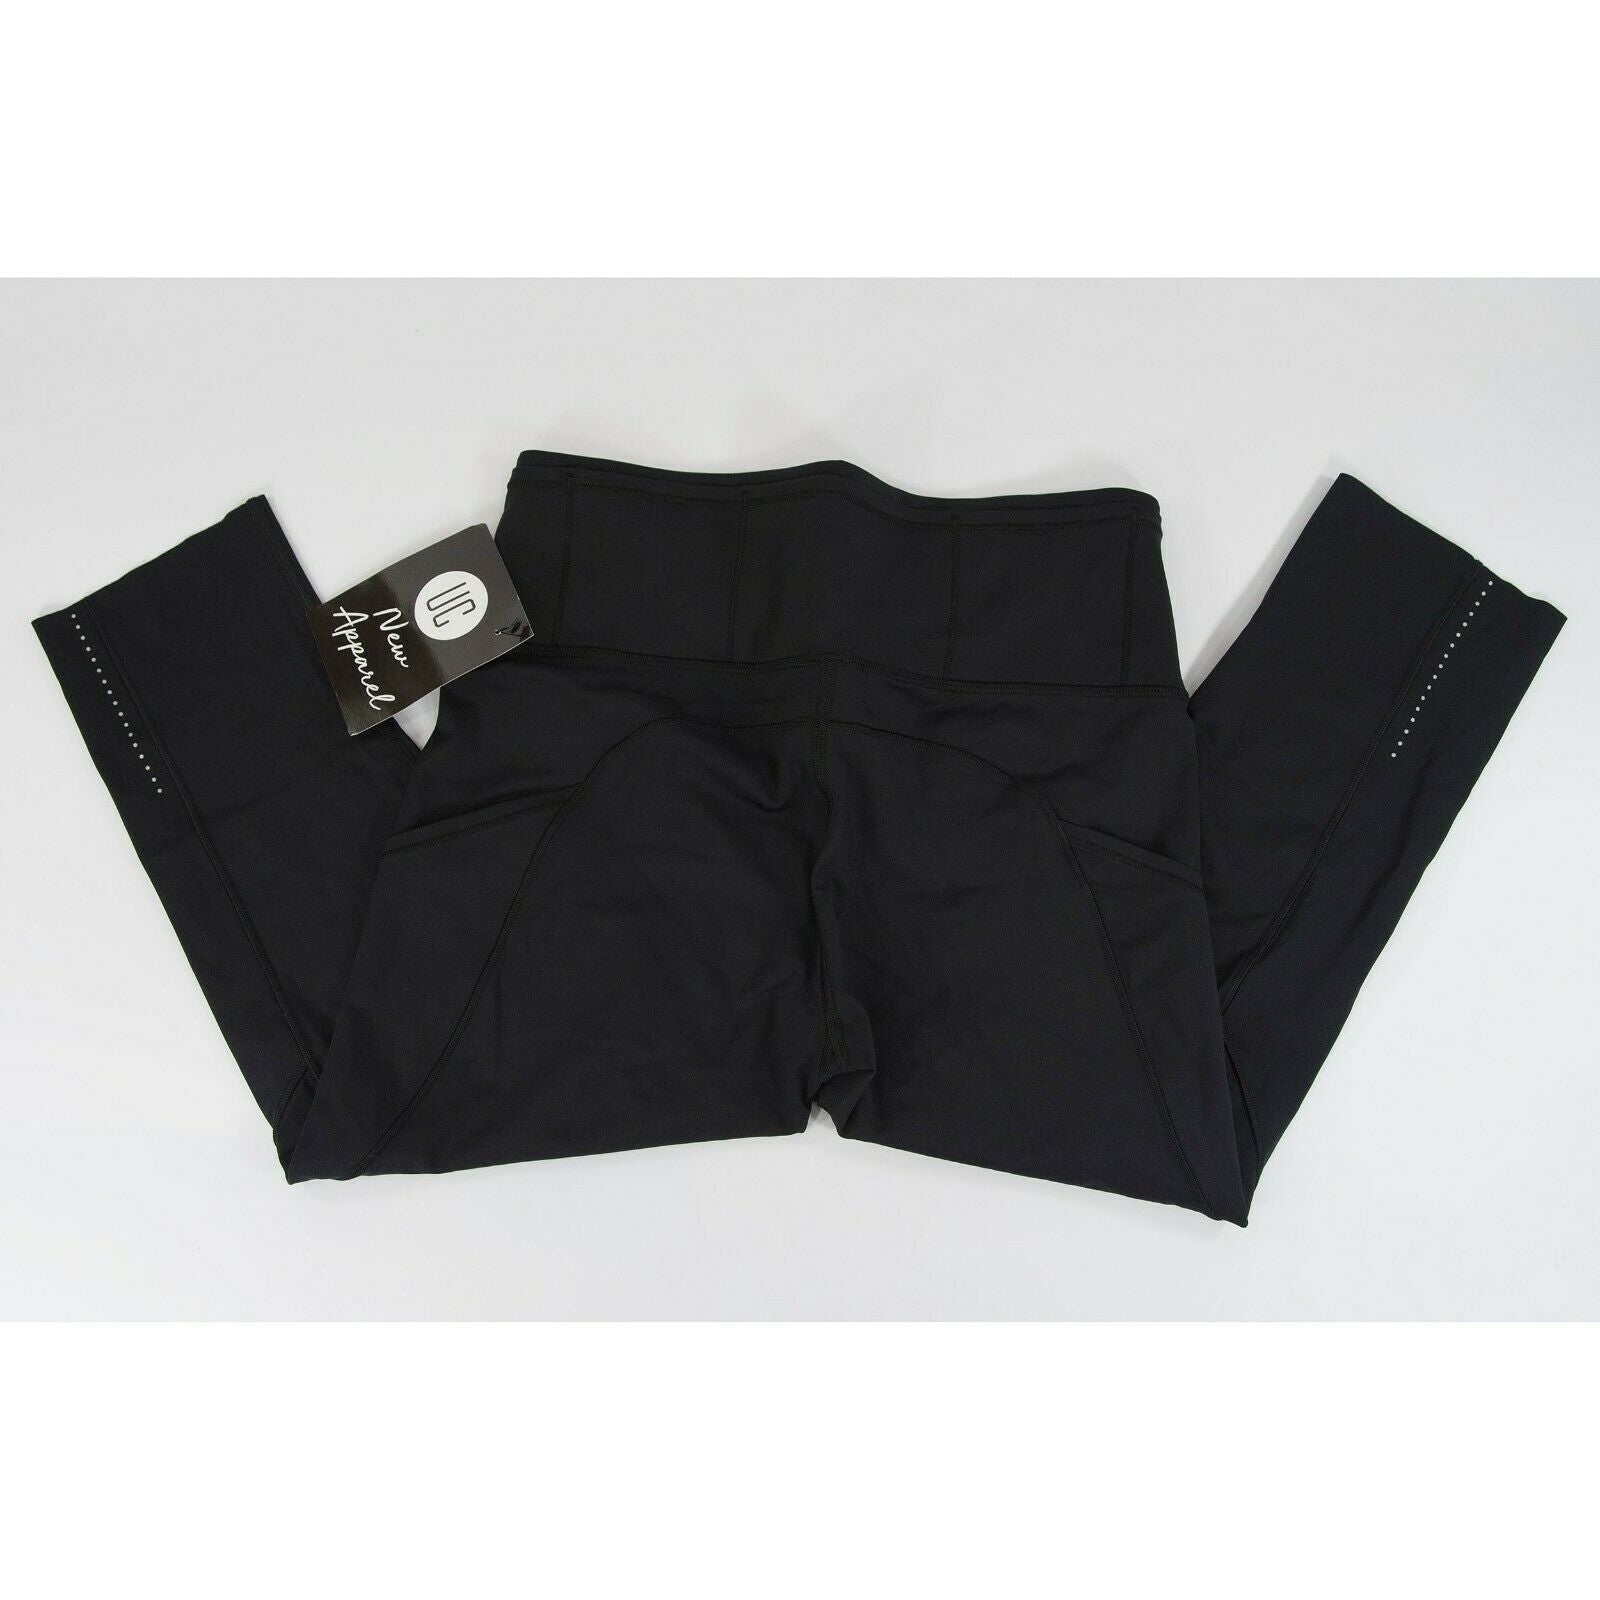 Lululemon Black Wonder Under Cropped Pocket tight leggings NWOT Size 8 –  Uptown Cheapskate Austin